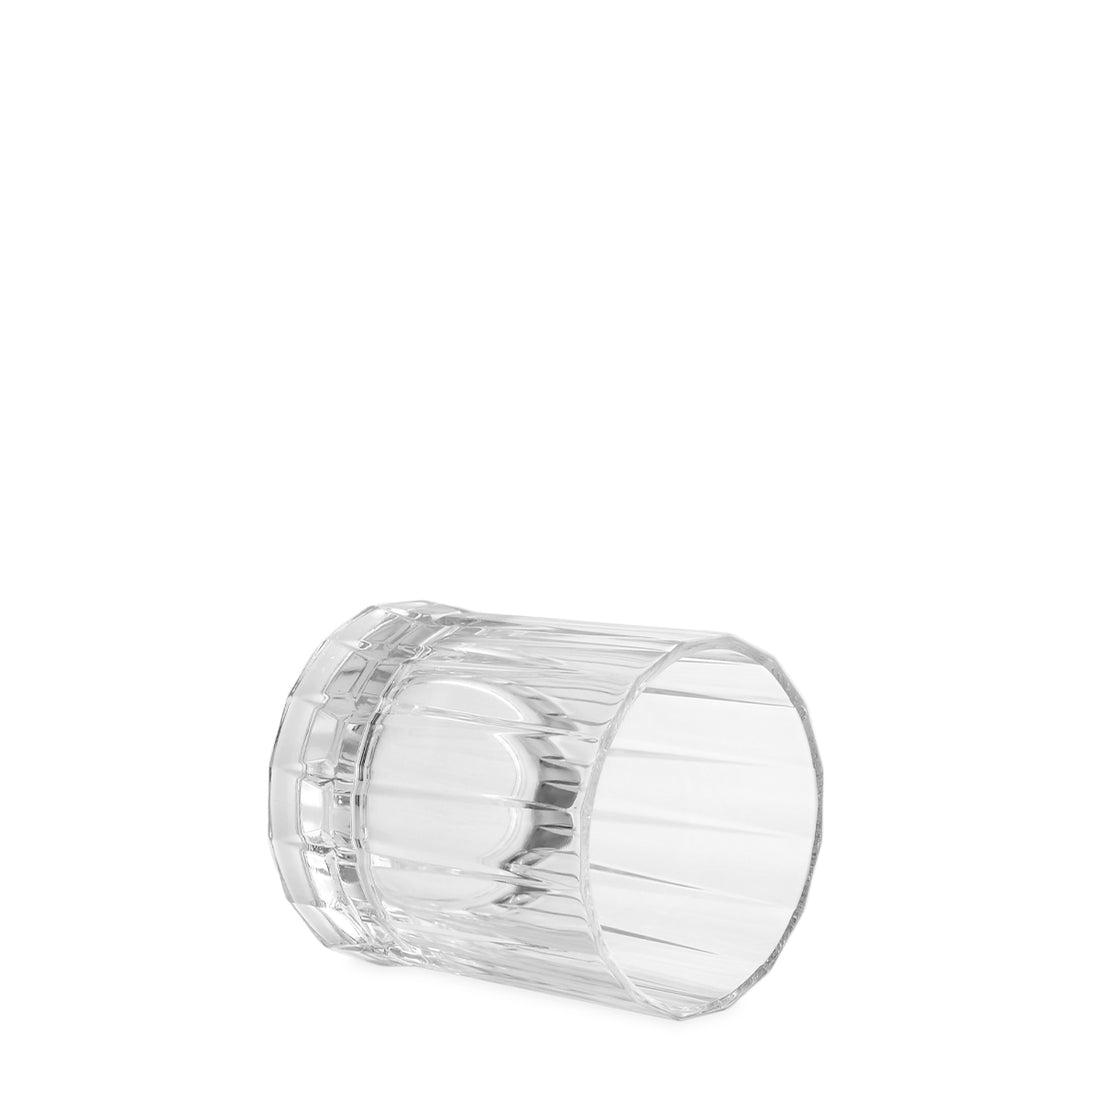 NUDE GLASS - WAYNE WHISKEY GLASS